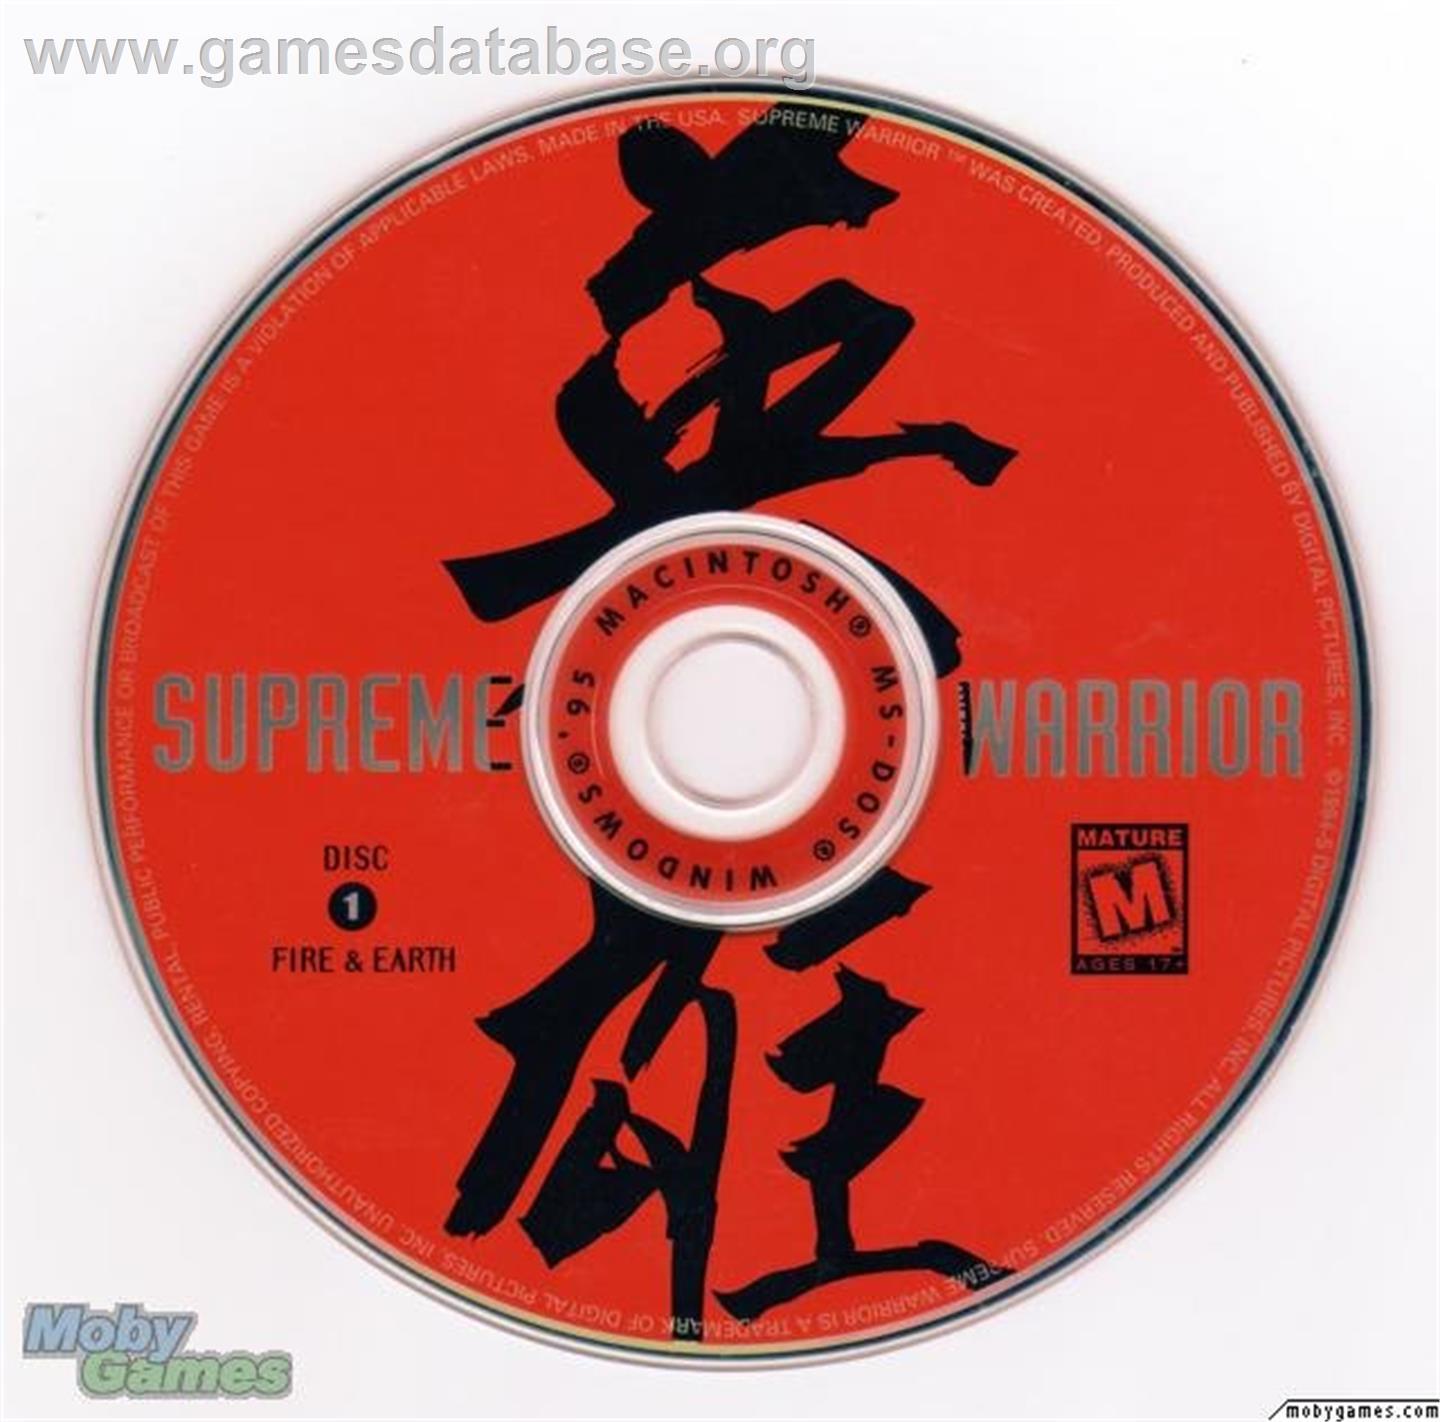 Supreme Warrior Logo - Supreme Warrior - Microsoft DOS - Artwork - Disc